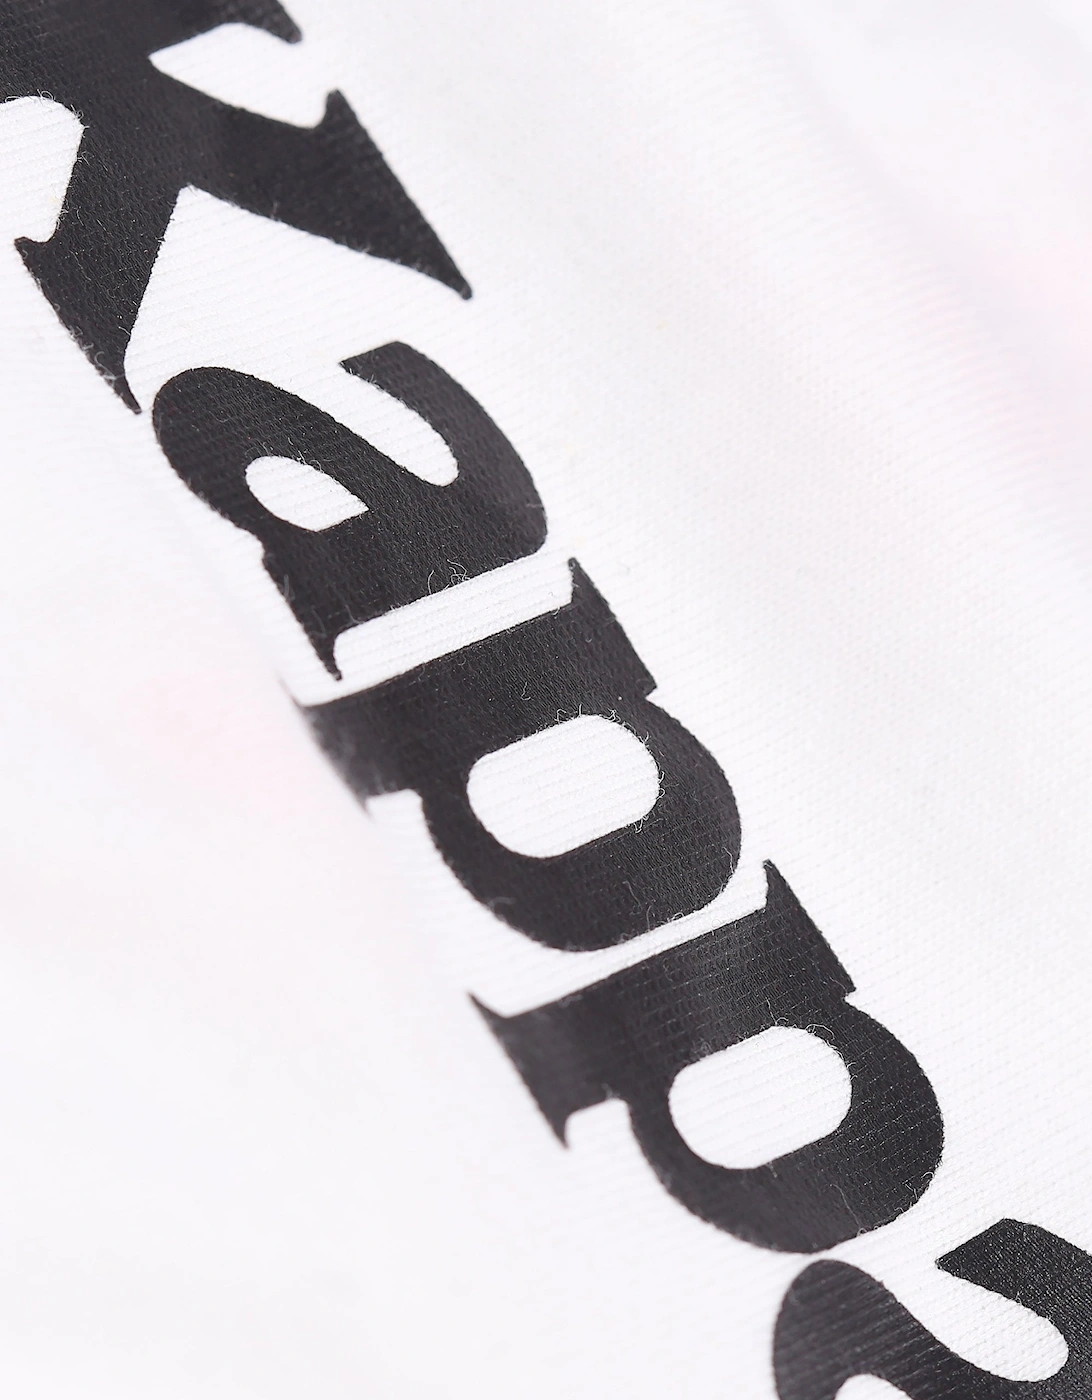 Authentic Fico Unisex Regular Fit Crew Neck T-Shirt | White/Black